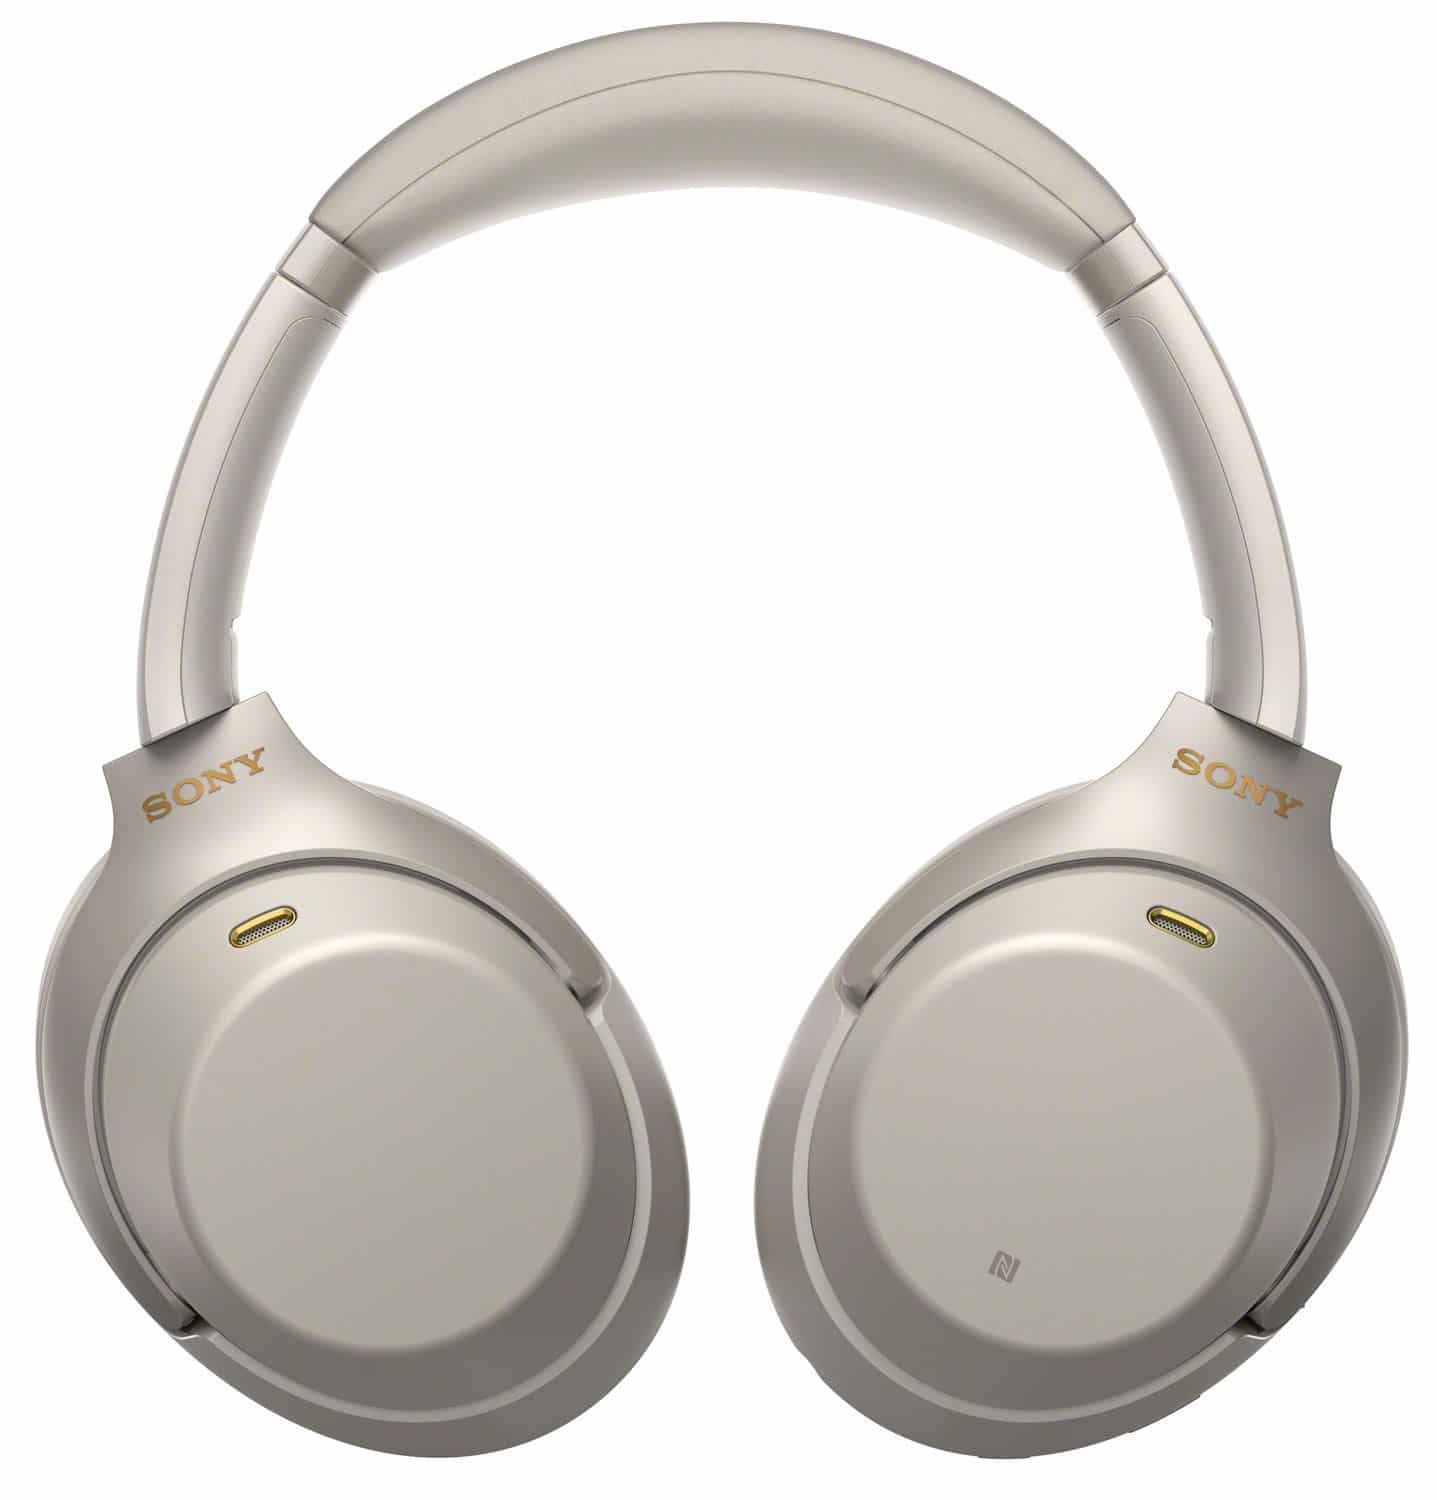 Sony Silver Wireless Noise Canceling Overhead Headphones - WH1000XM3/S.